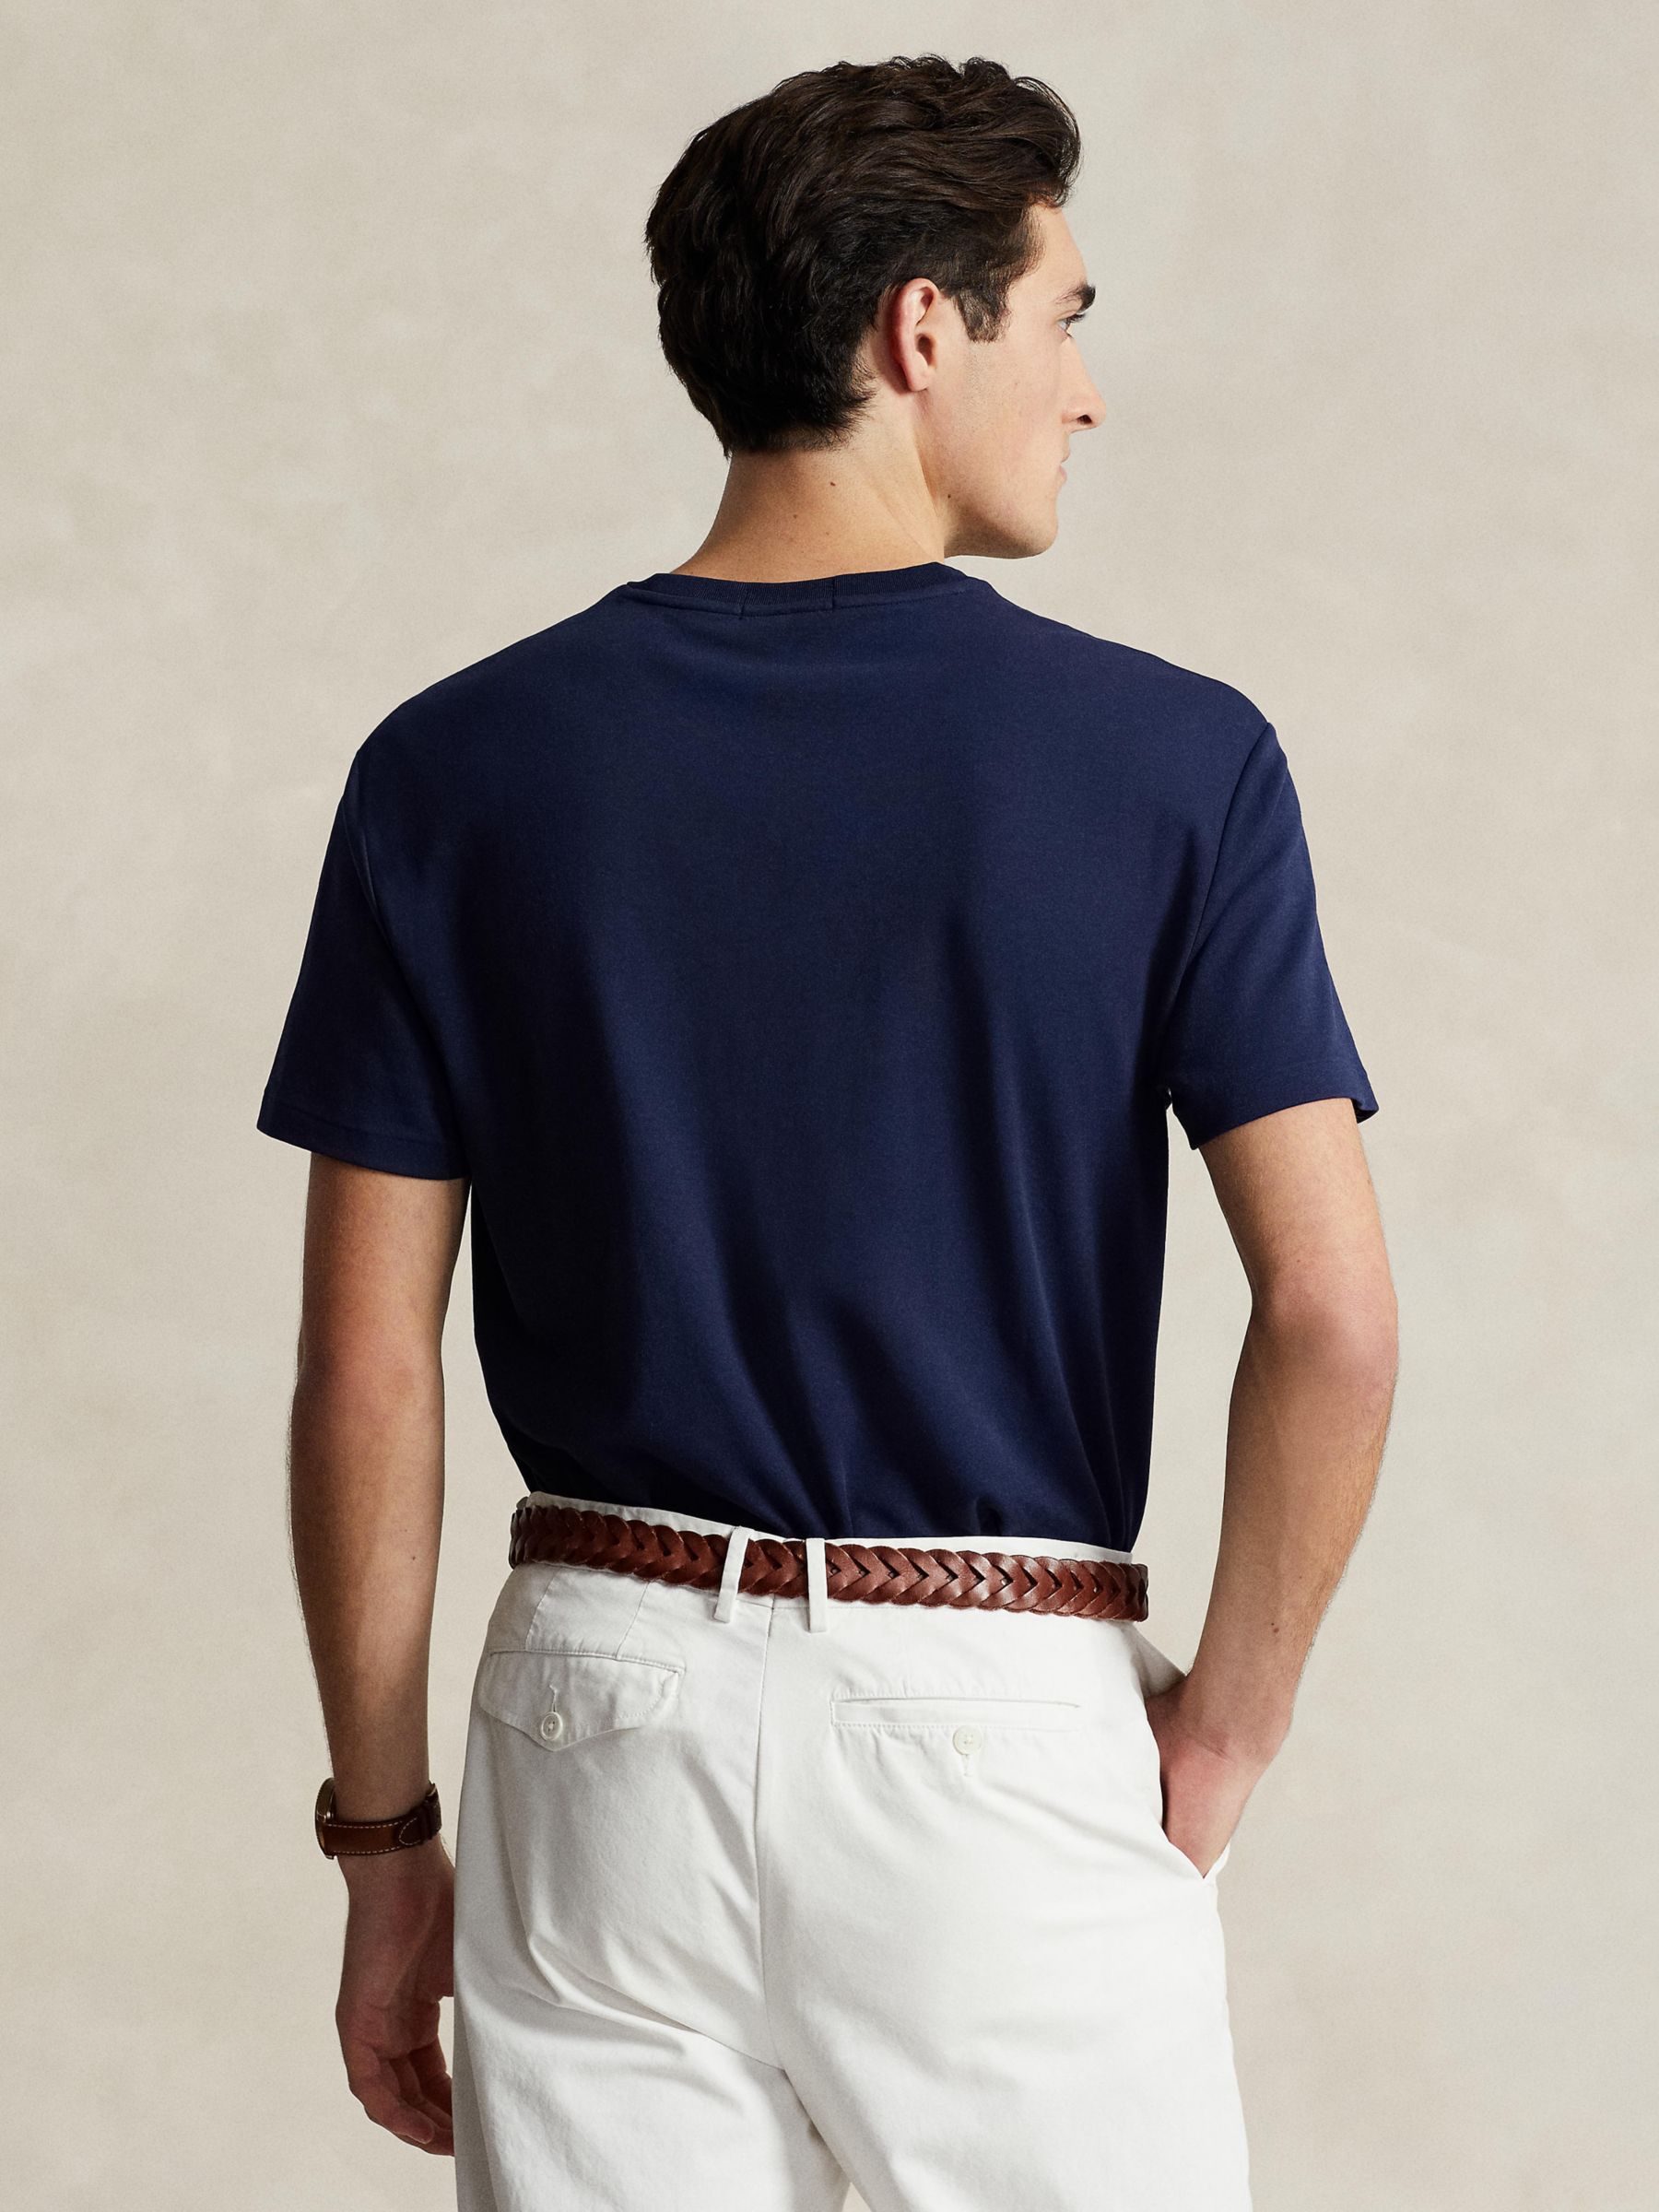 Polo Ralph Lauren Big & Tall Cotton T-Shirt, Derby Blue Heather at John  Lewis & Partners